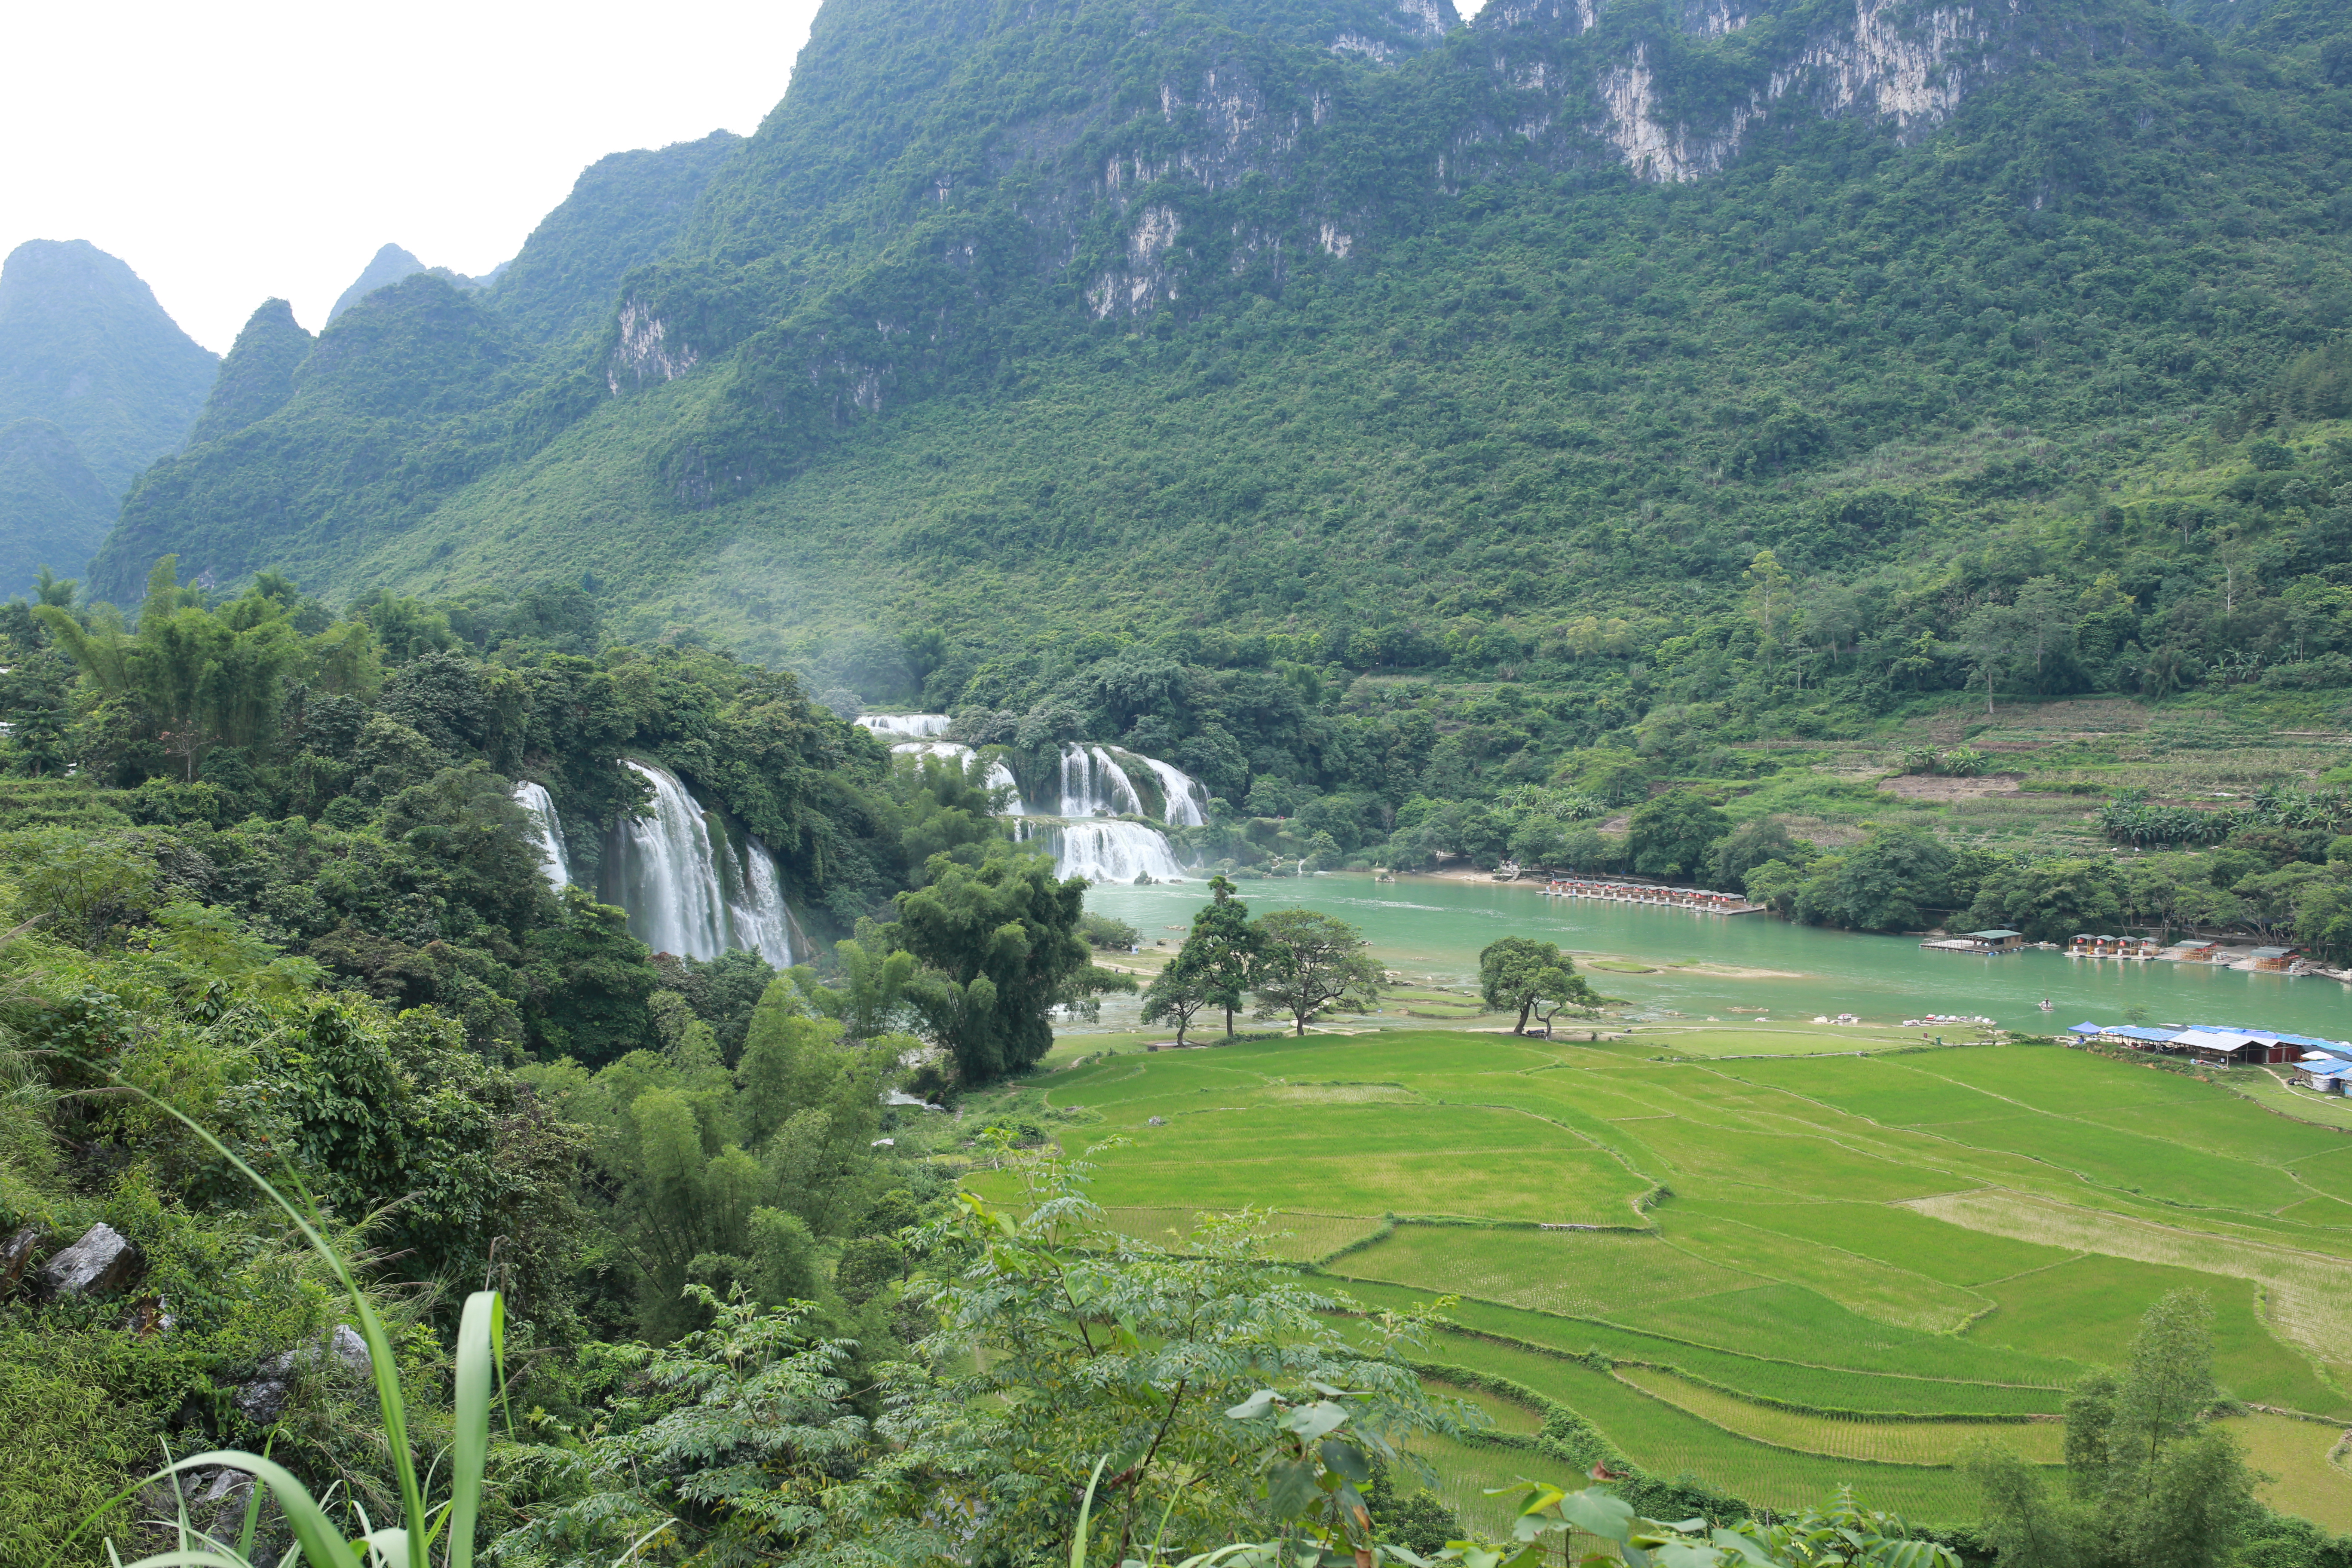 Ban gioc waterfall Vietnam